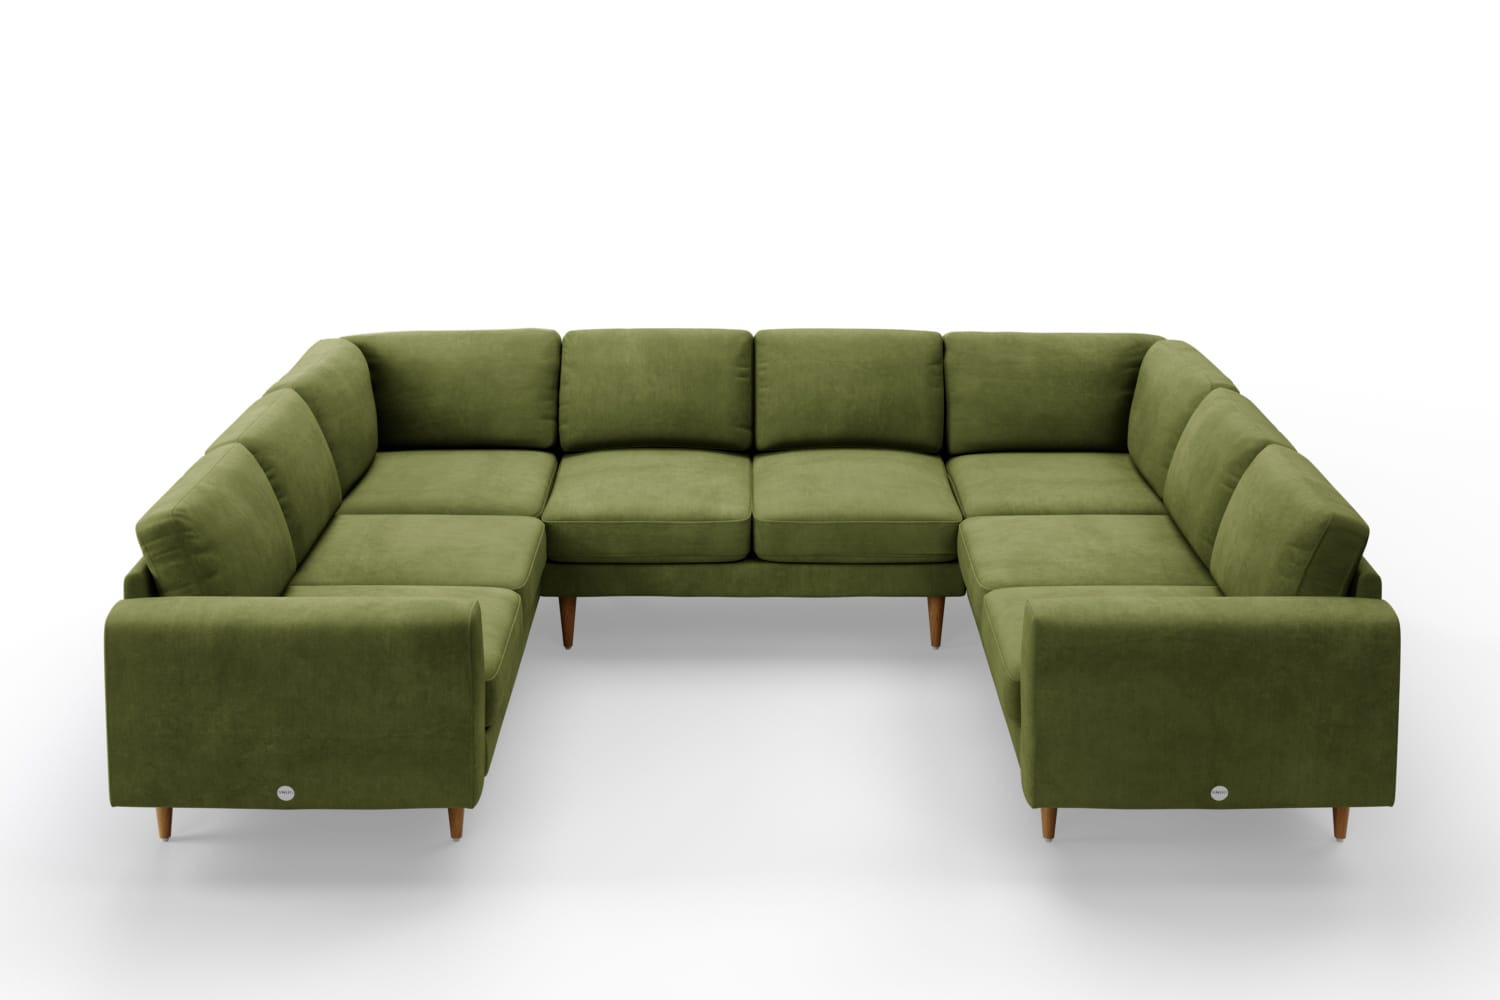 SNUG | The Big Chill Corner Sofa Large in Olive